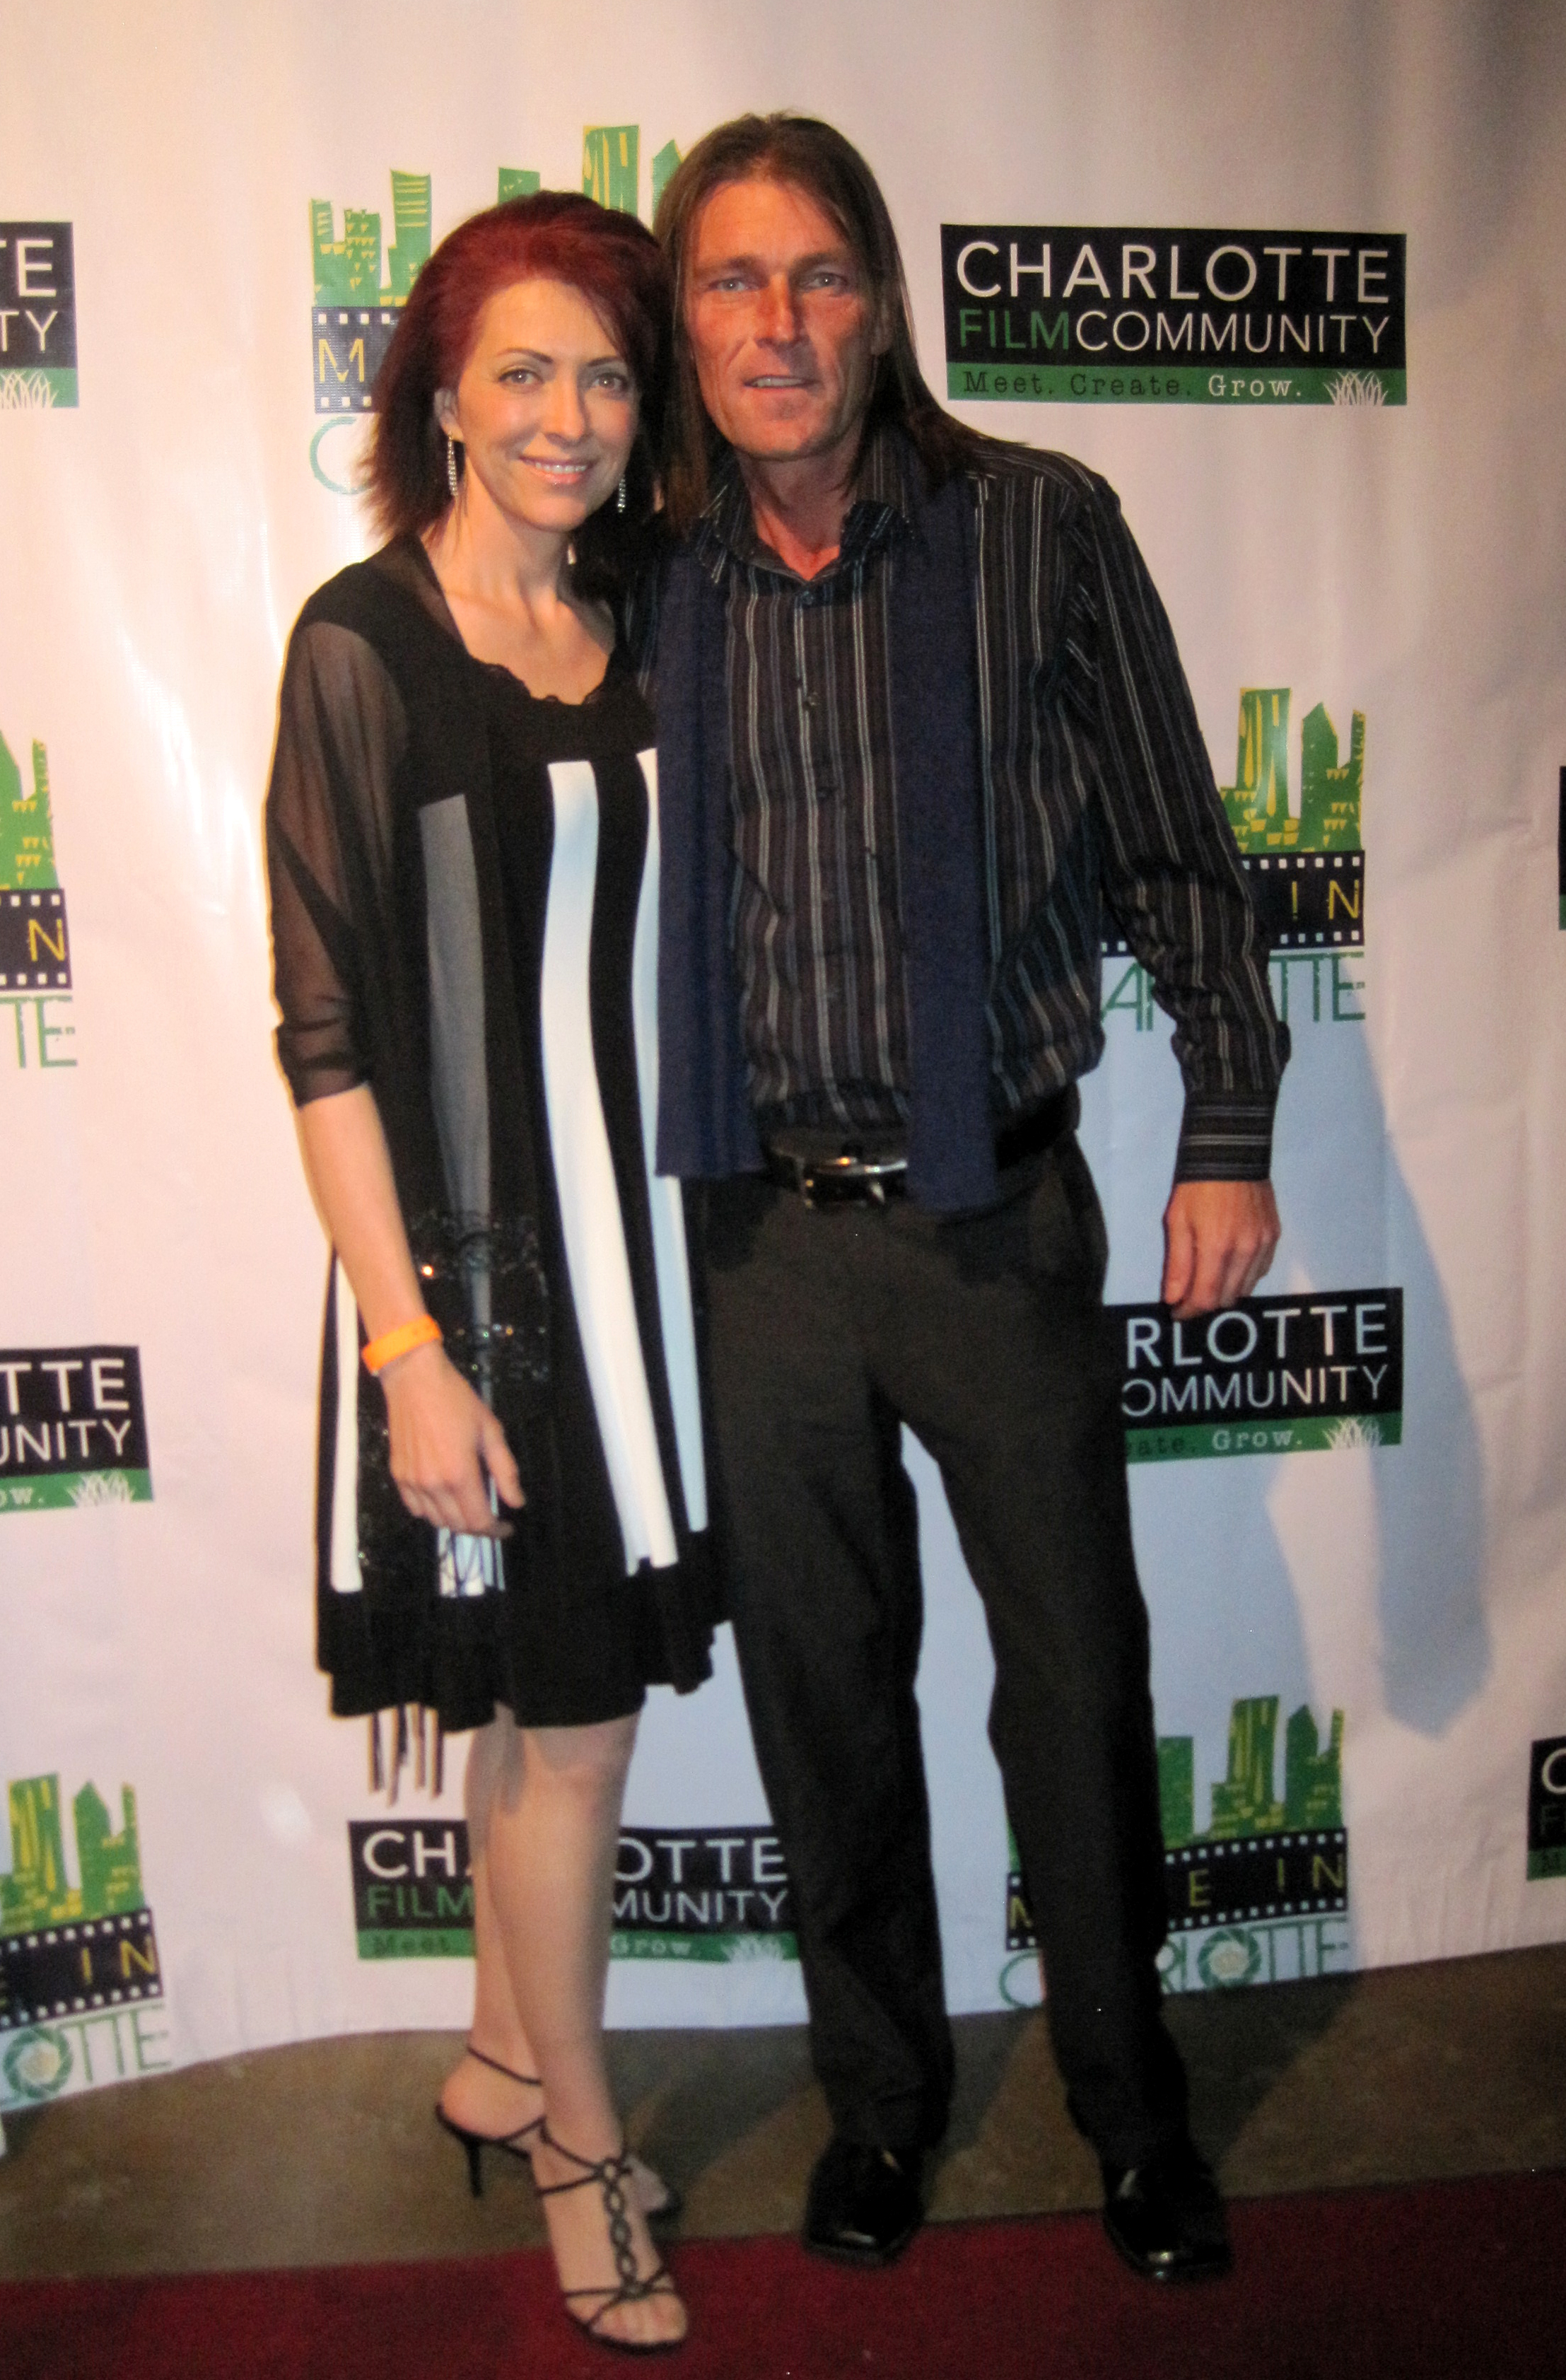 Angela Oberer and Actor, Davis Osborne at the Made in Charlotte Film Awards Jan 18, 2011